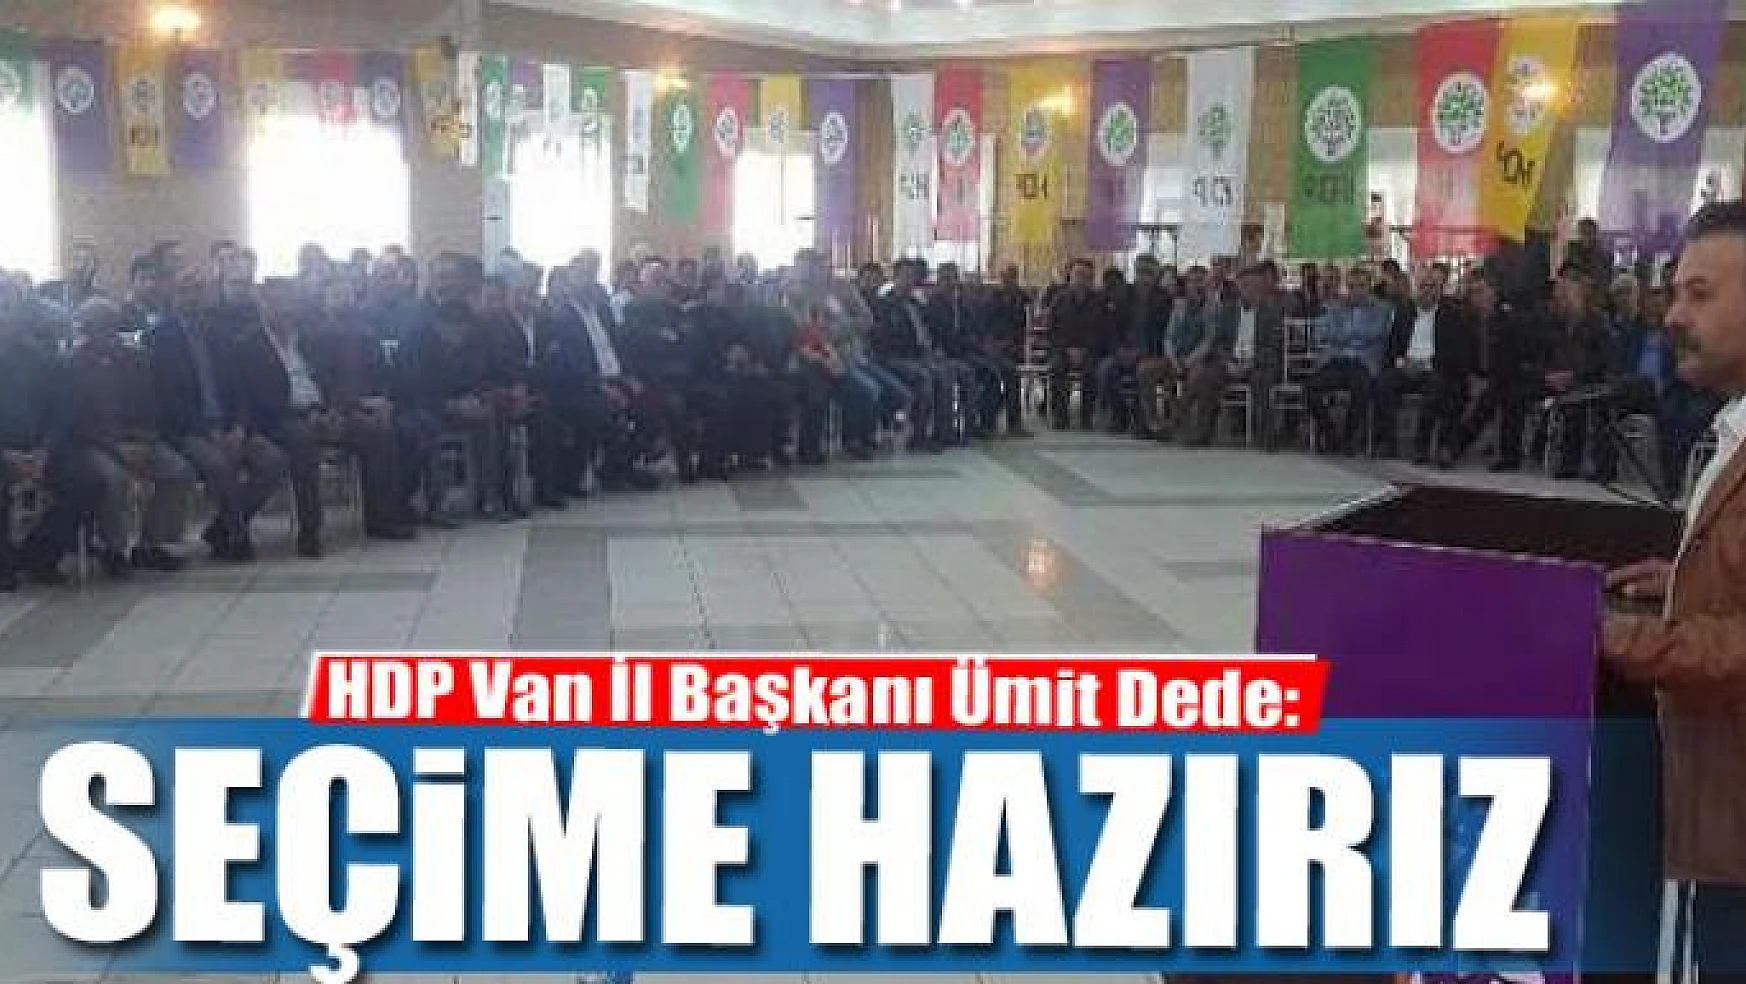 HDP: SEÇİME HAZIRIZ